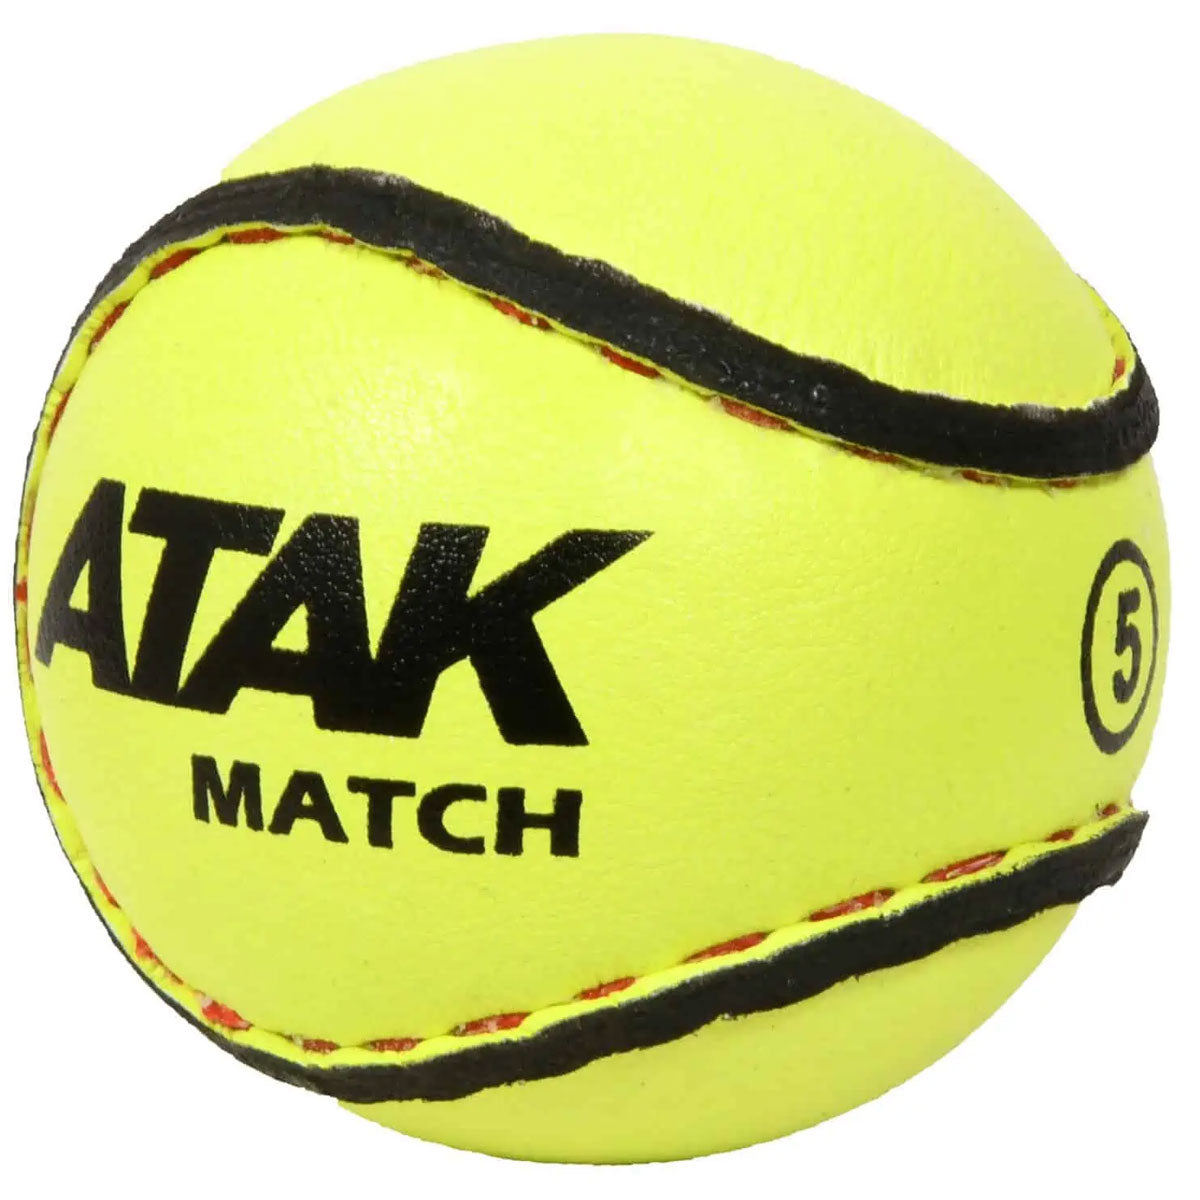 Atak Match Sliotar - Size 5 - Neon Yellow